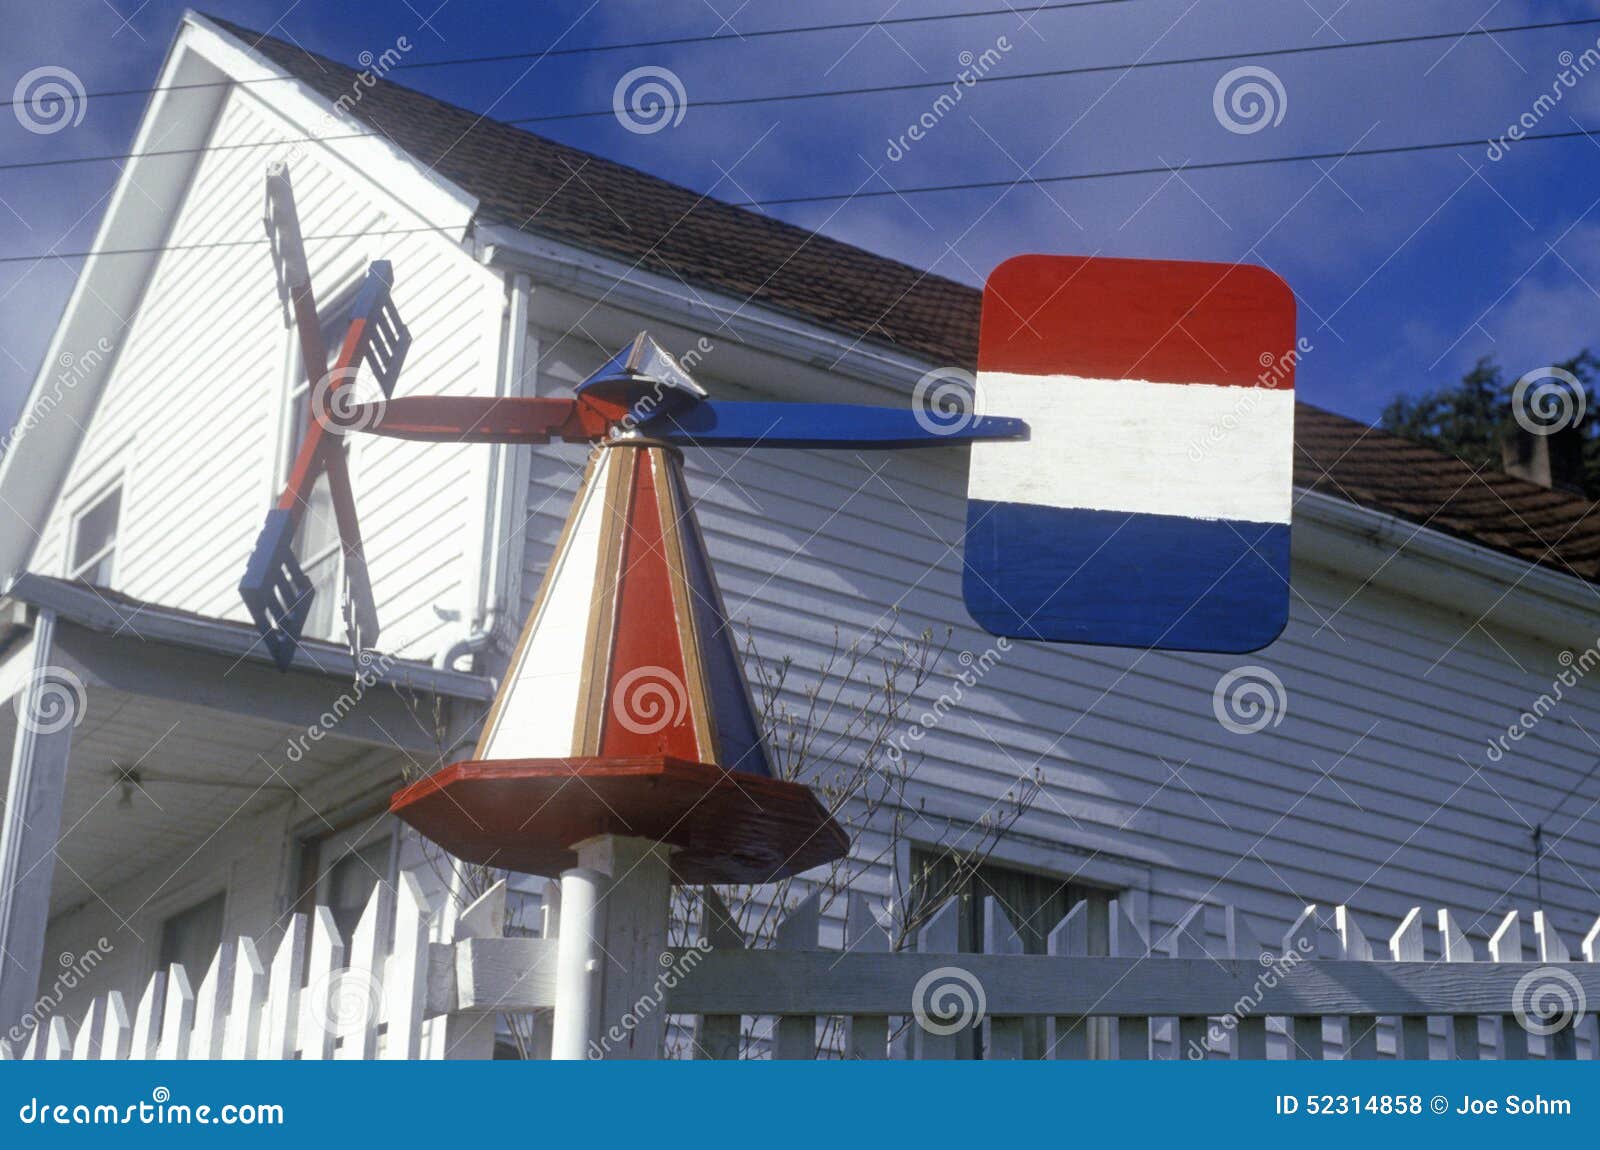 dutch windmill weathervane, id